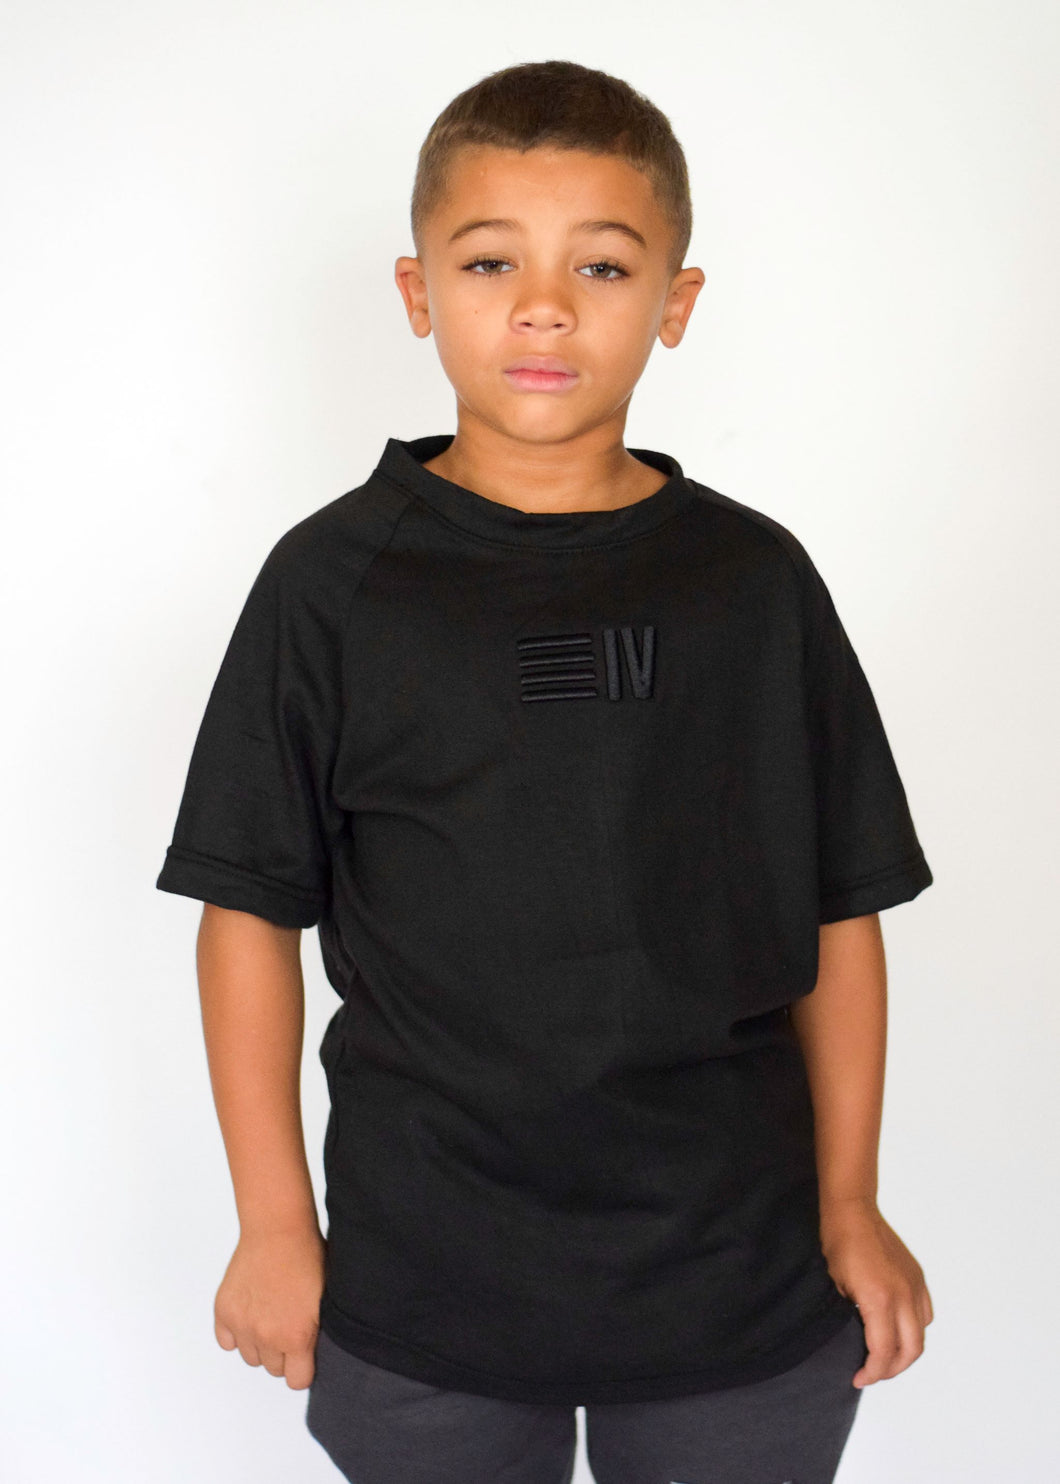 Youth Short-Sleeve Black t-shirt